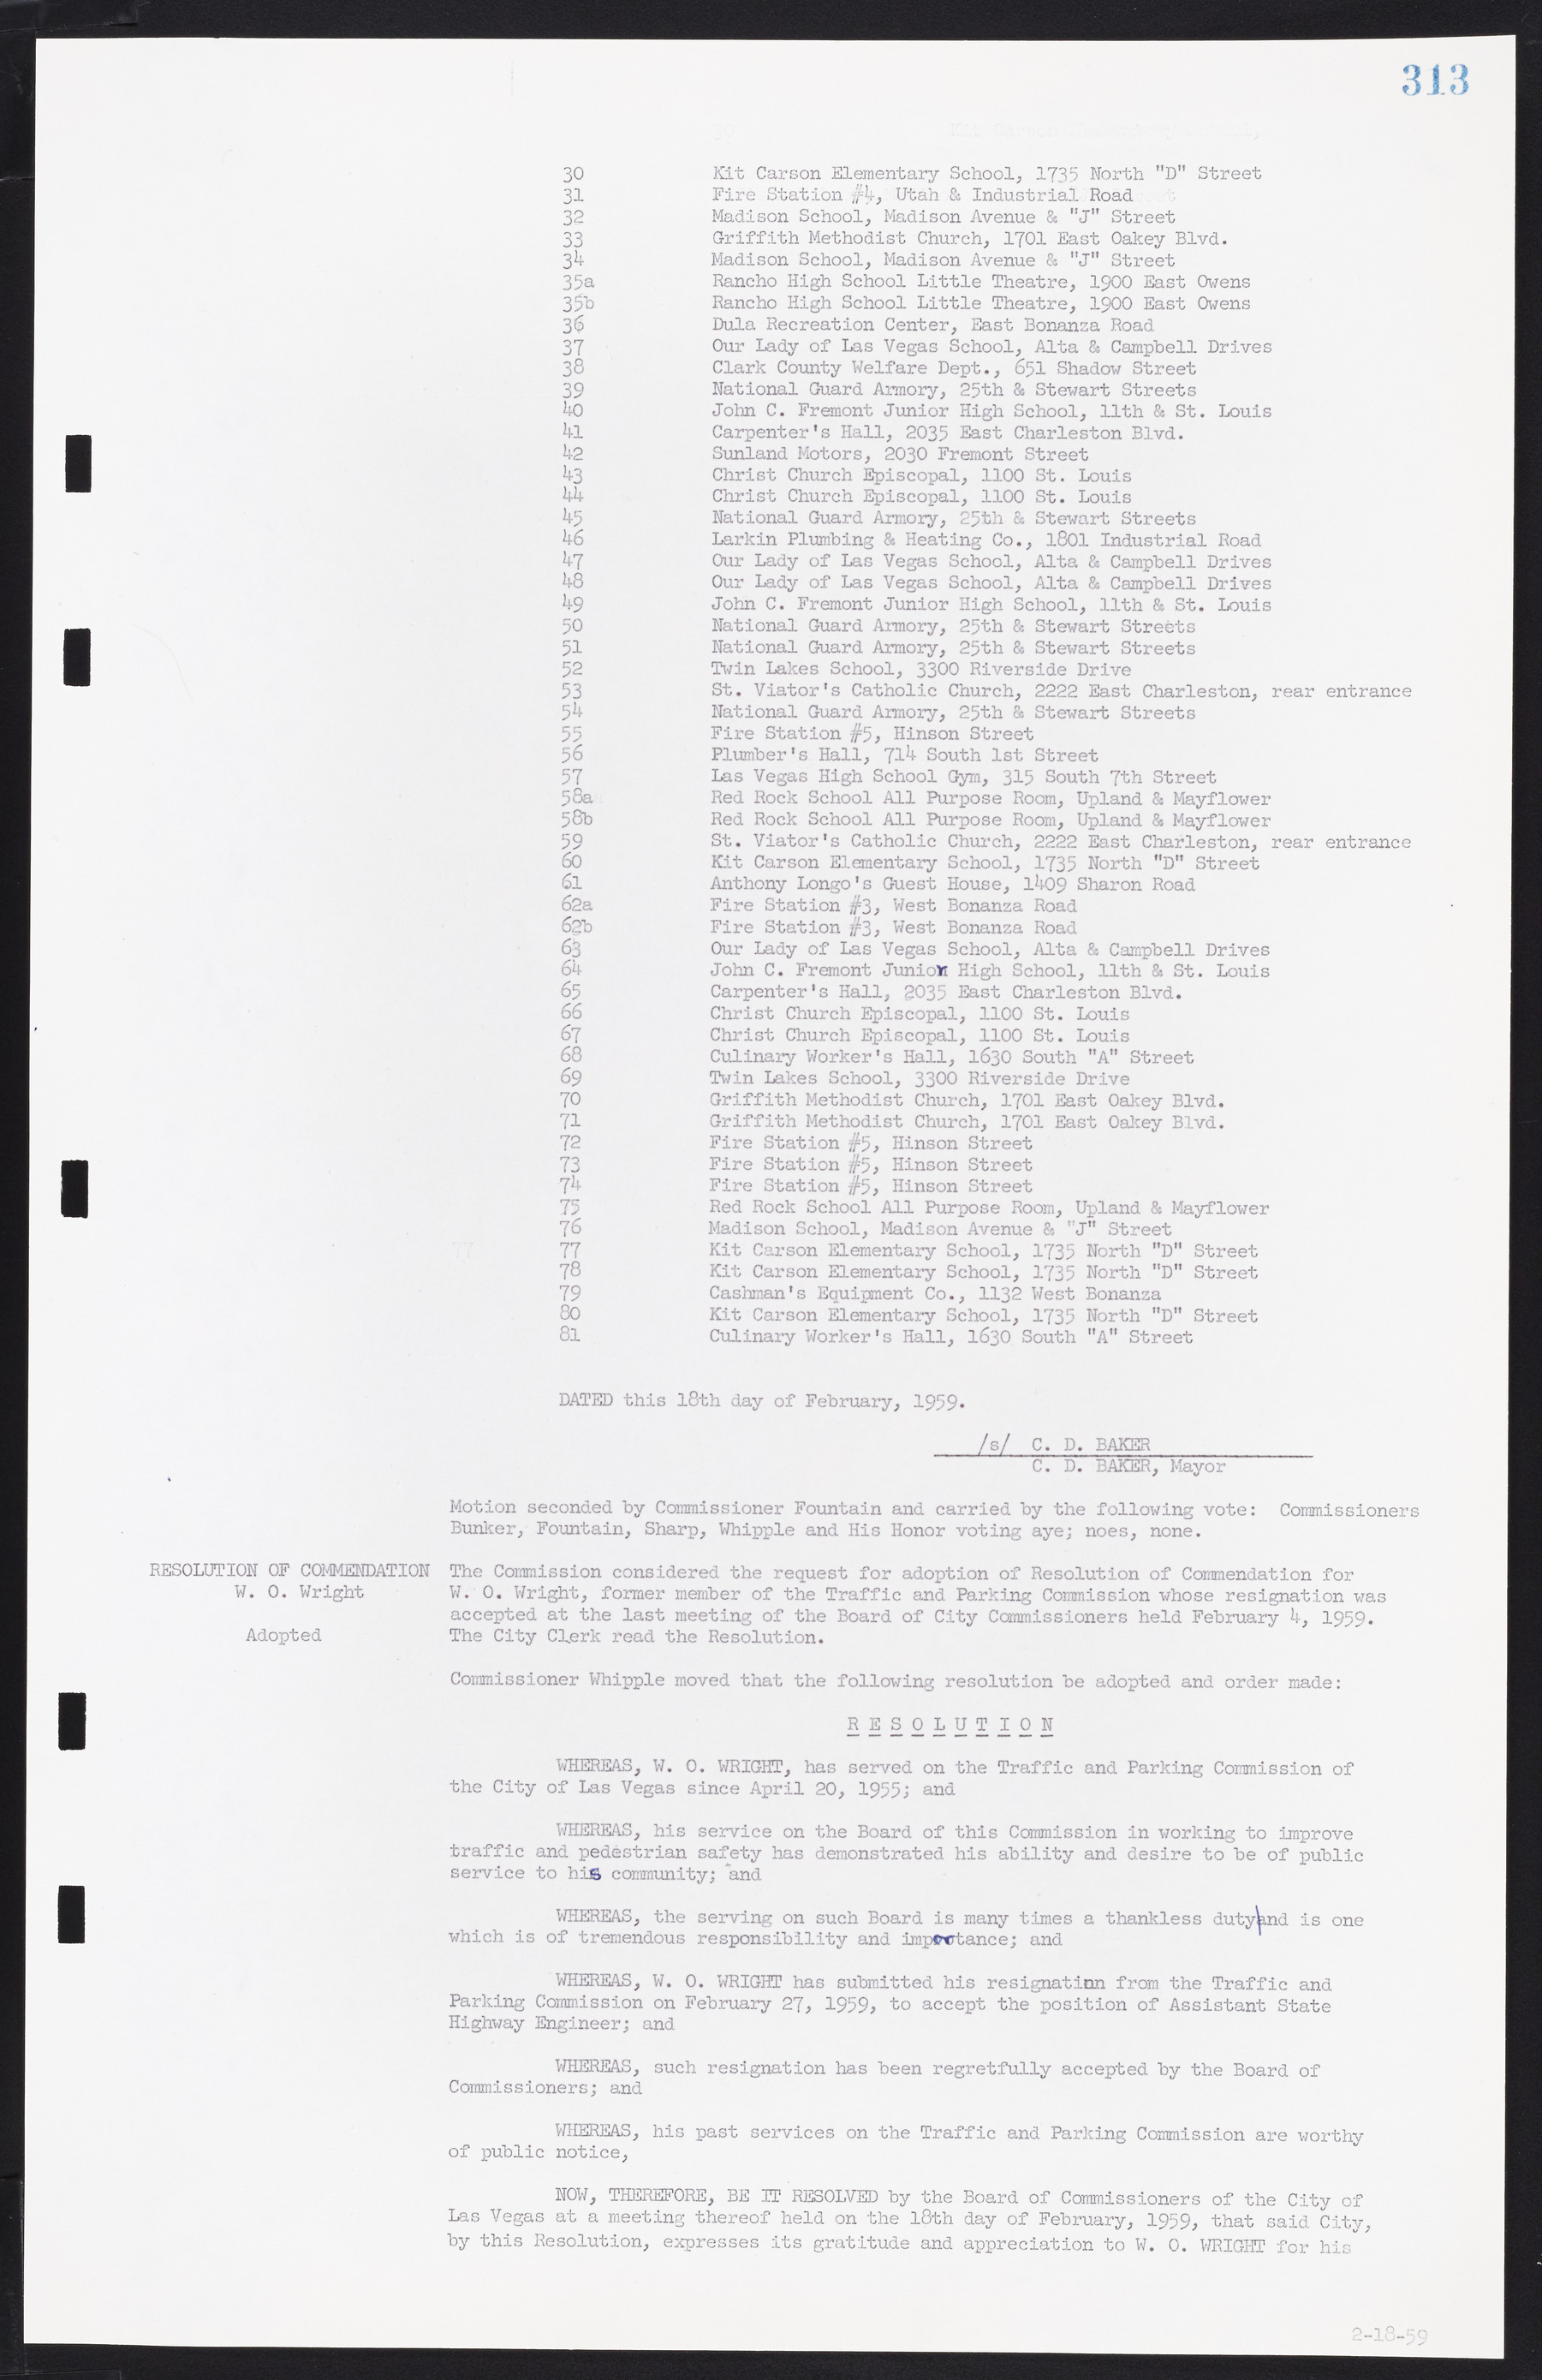 Las Vegas City Commission Minutes, November 20, 1957 to December 2, 1959, lvc000011-321